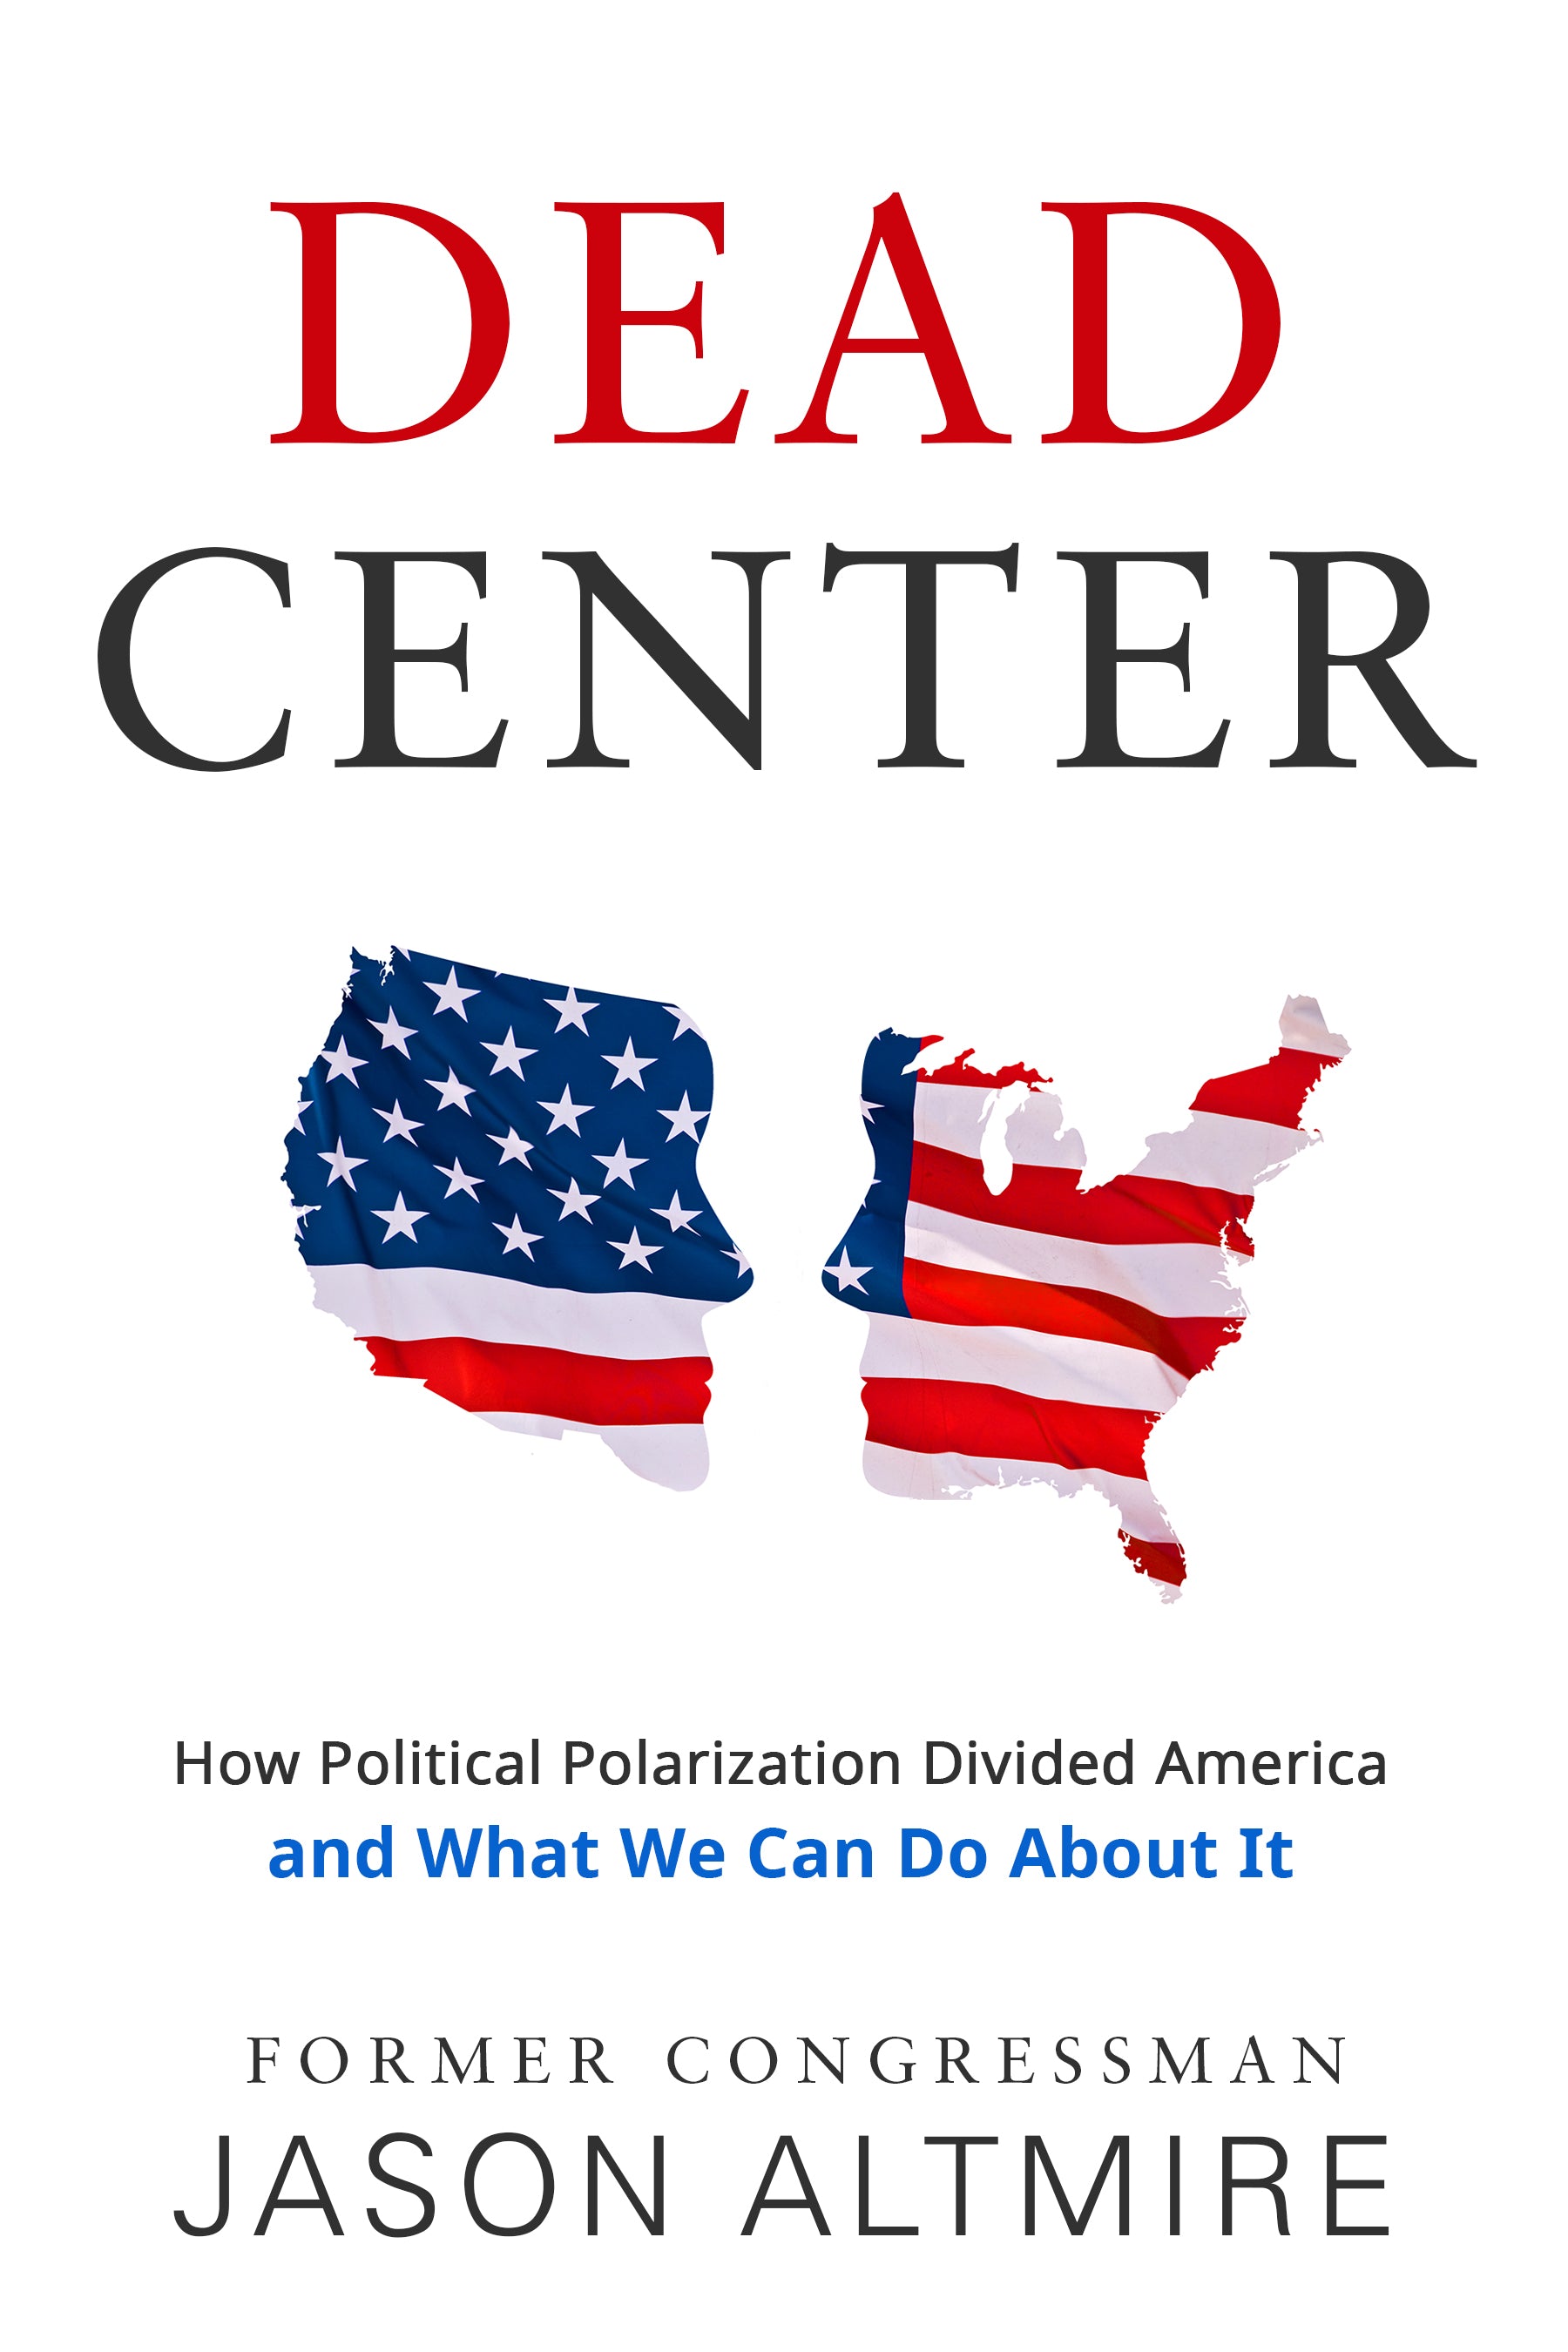 Jason Altmire’s “Dead Center” returns as the Sunbury Press bestseller for April